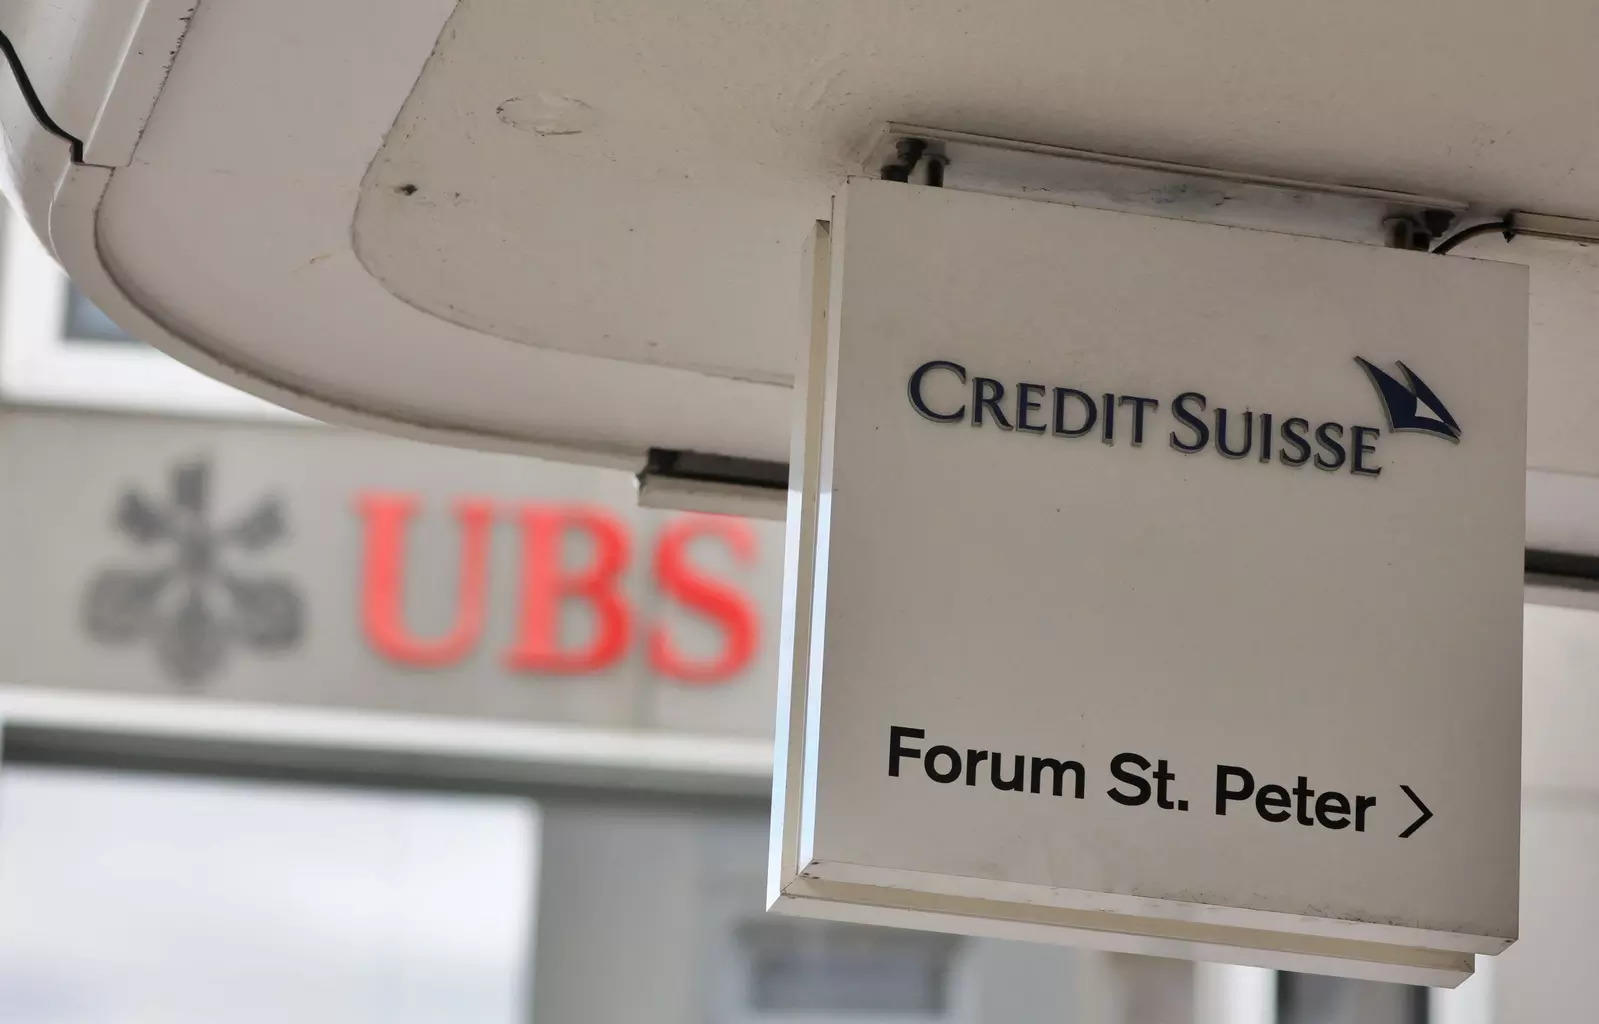 What does the CDS basis mean for credit investors? - Bond Vigilantes